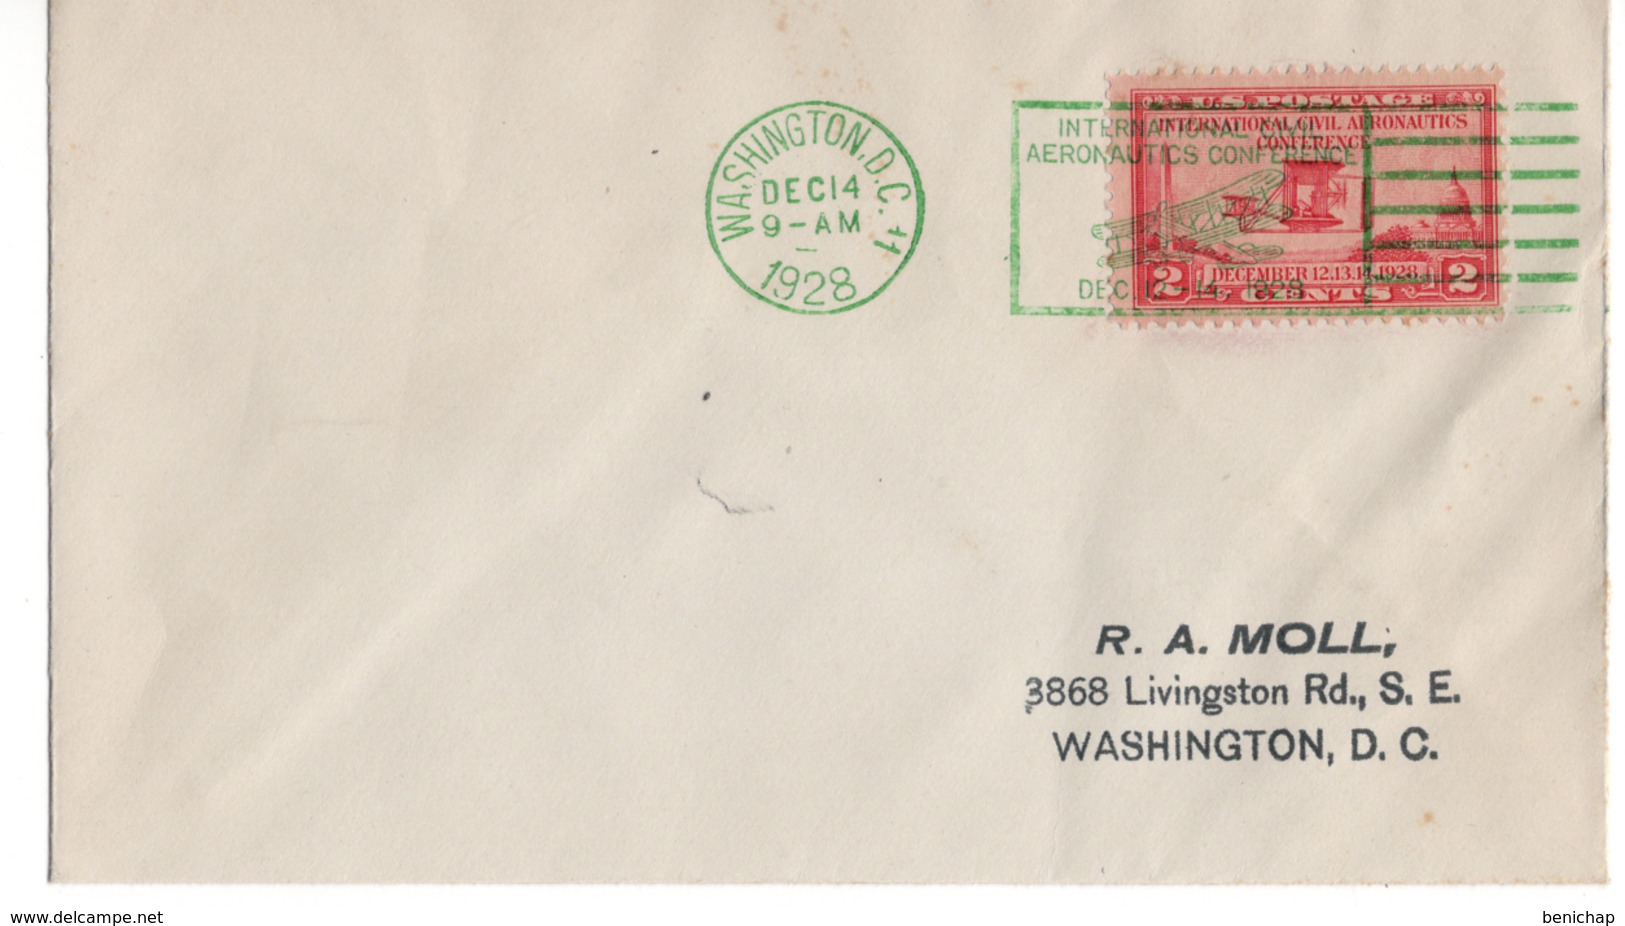 (R8) SCOTT 649 - AERONAUTICS CONFERENCE ISSUE - WRIGHT AIRPLANE - WASHINGTON D.C. - 1928 - GREEN CANCELLATION. - Event Covers